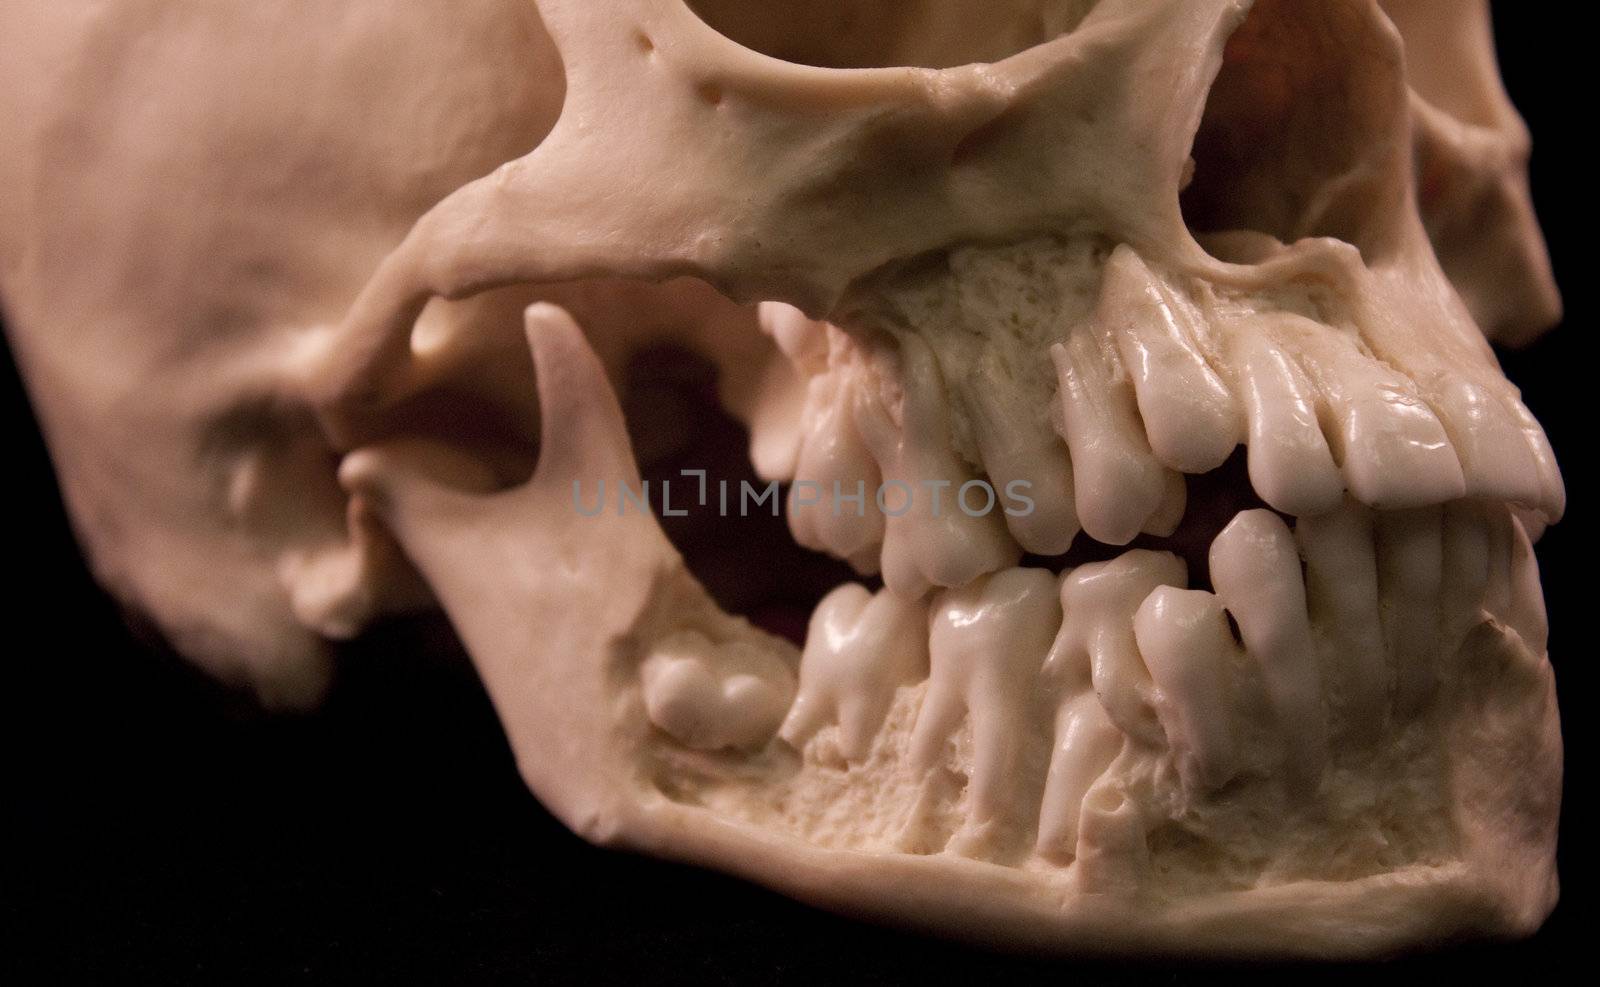 Human skull - bone head dead teeth spooky scary pirate isolated evil